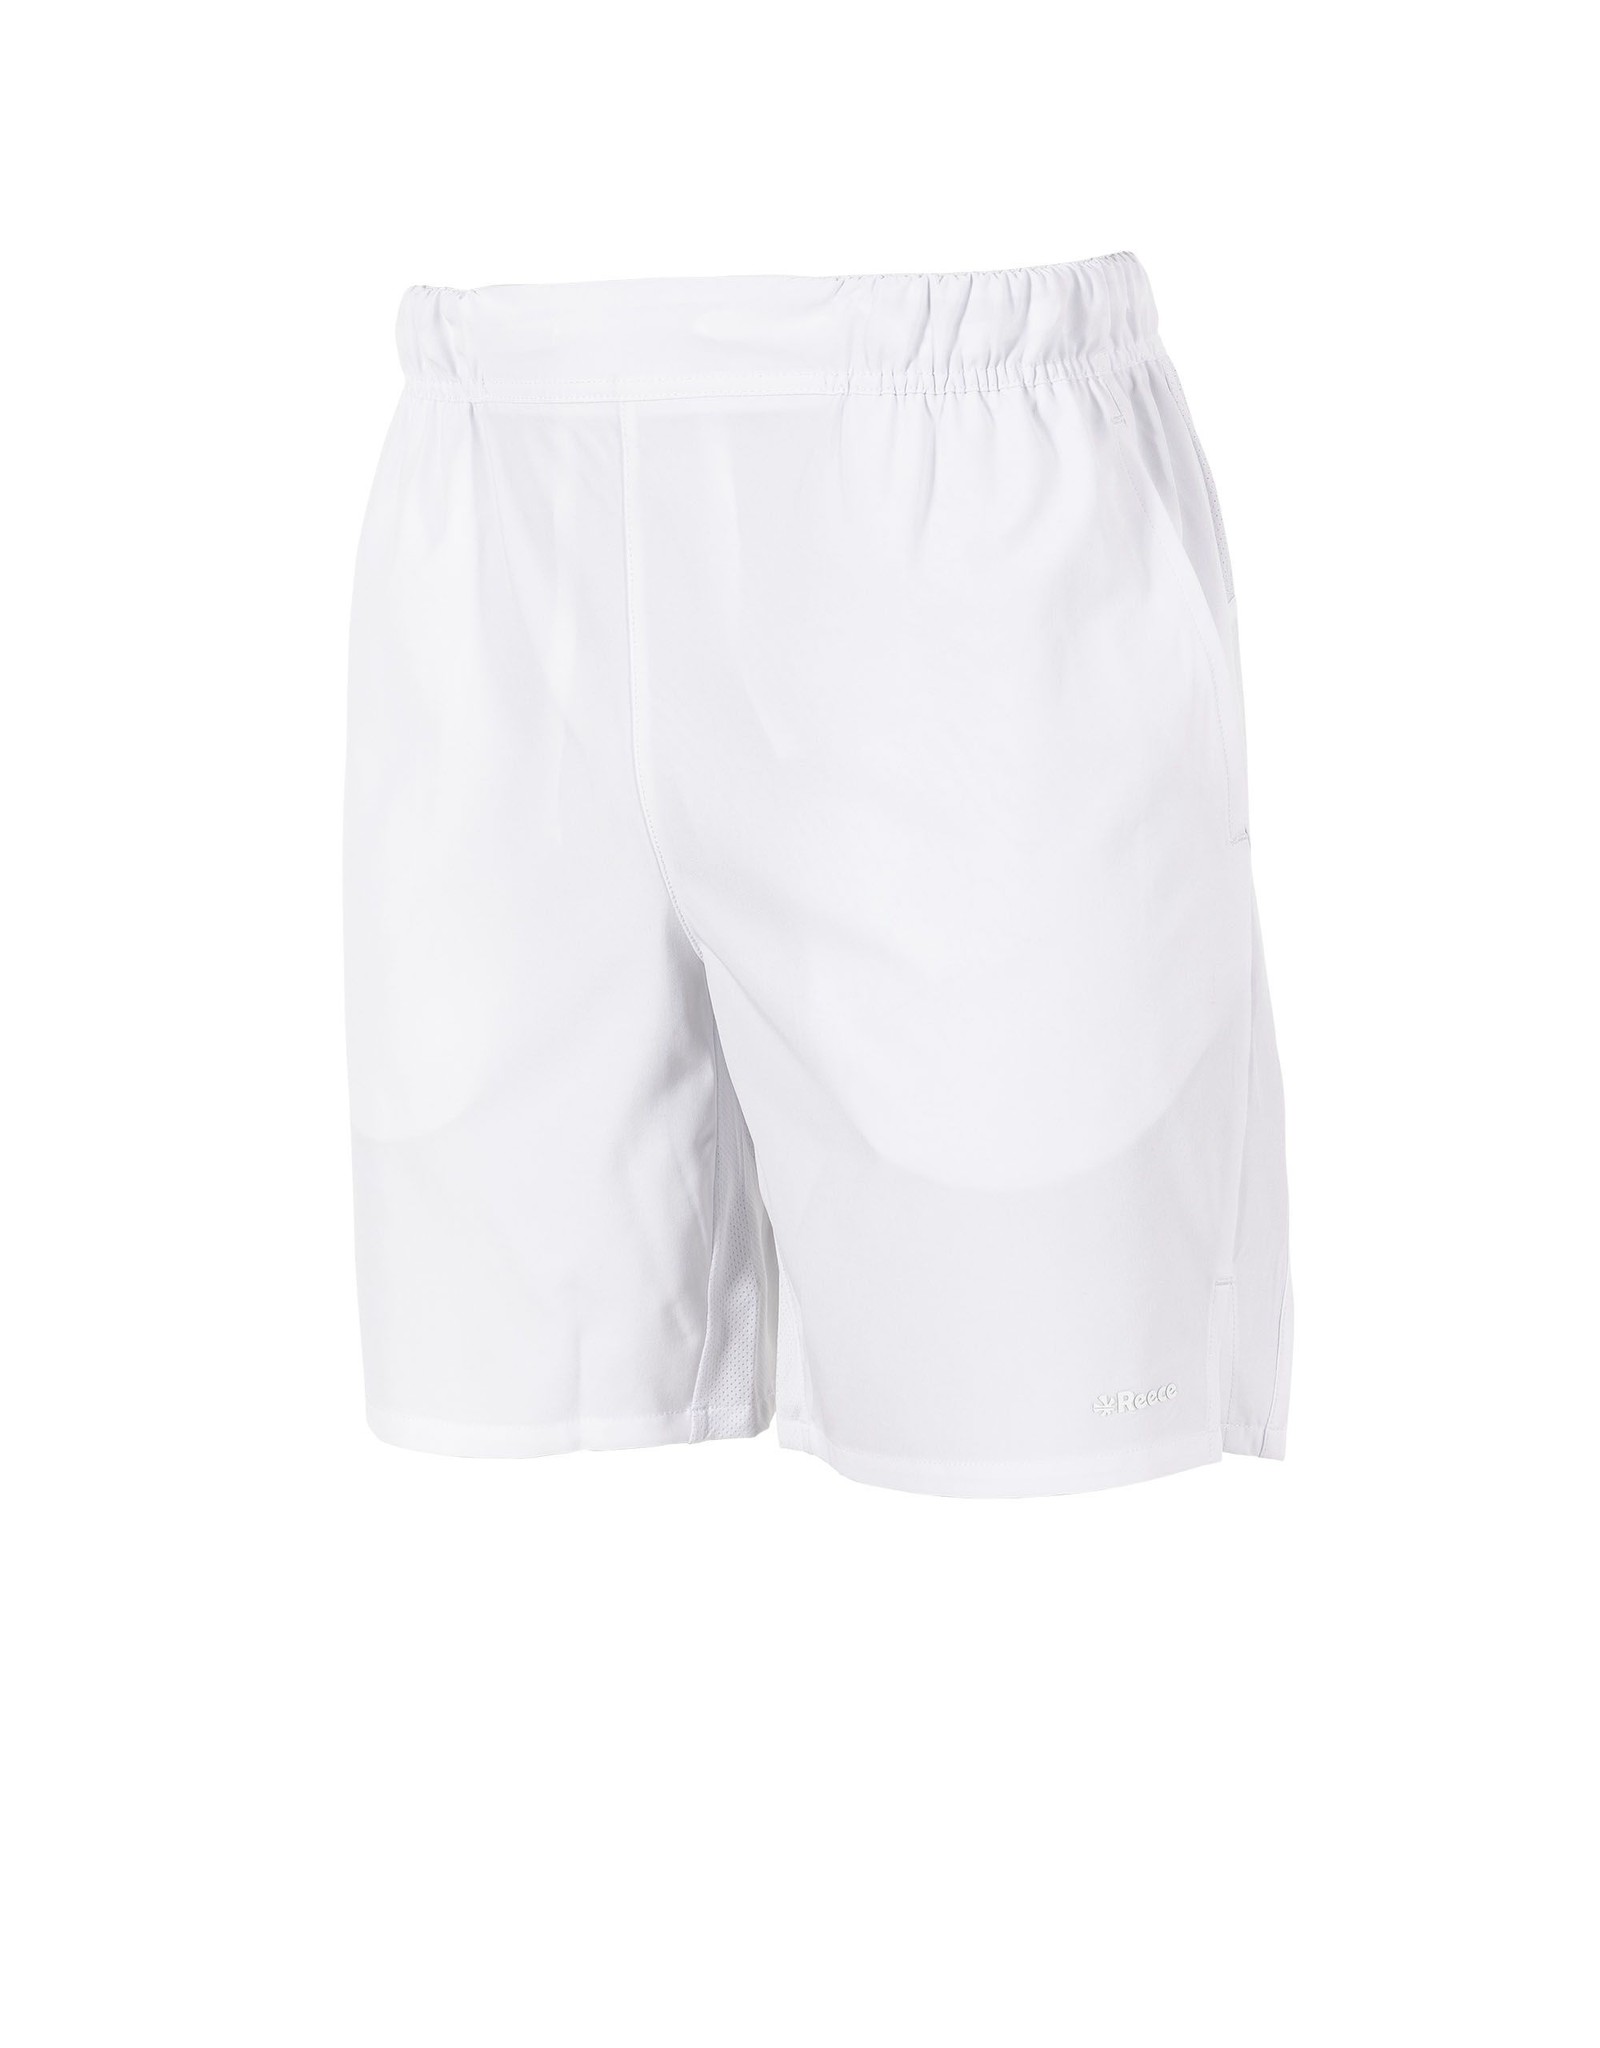 Reece Australia Racket Shorts-White